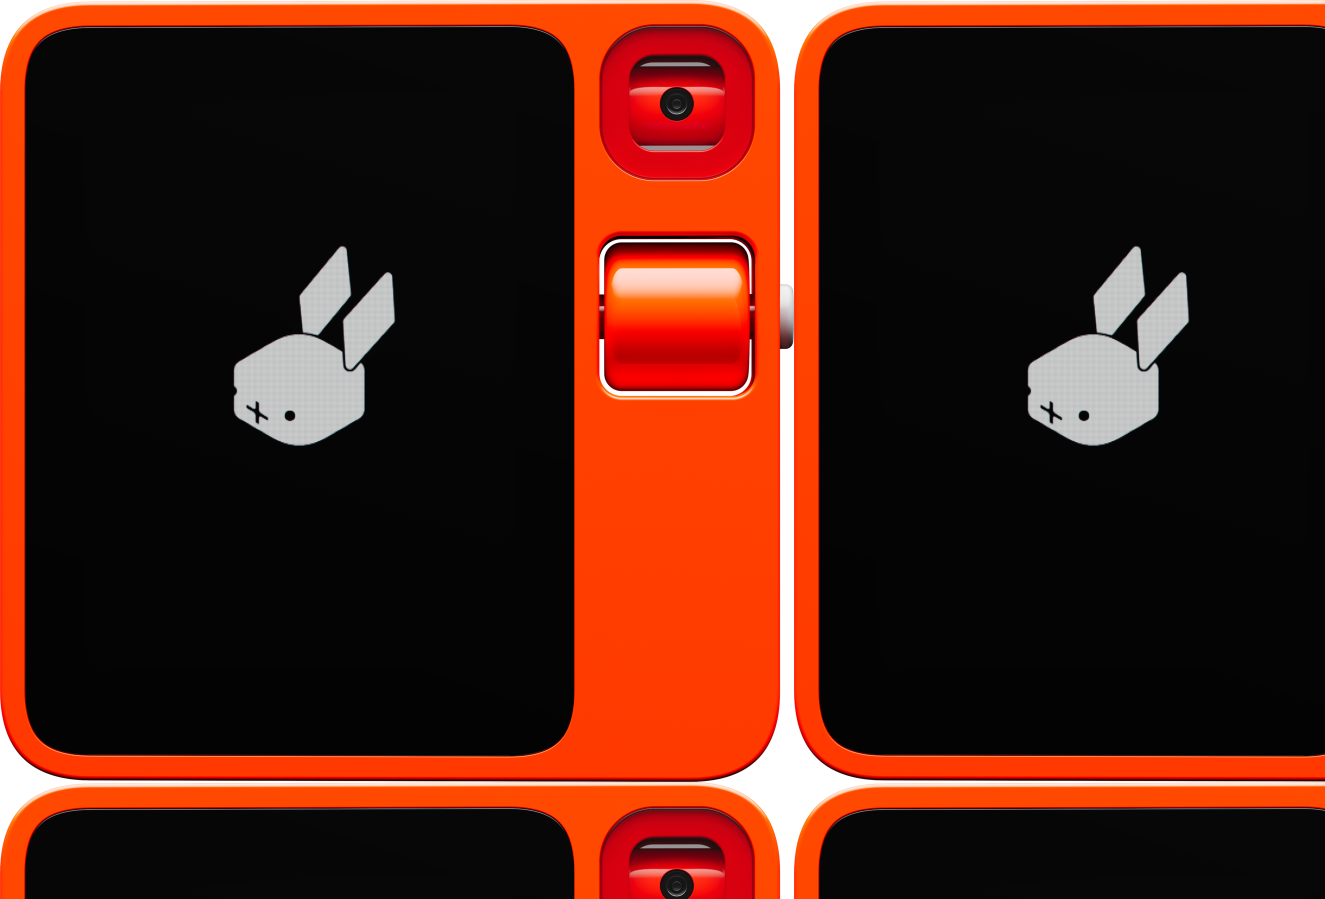 Rabbit's R1 Hardware Device promotion image